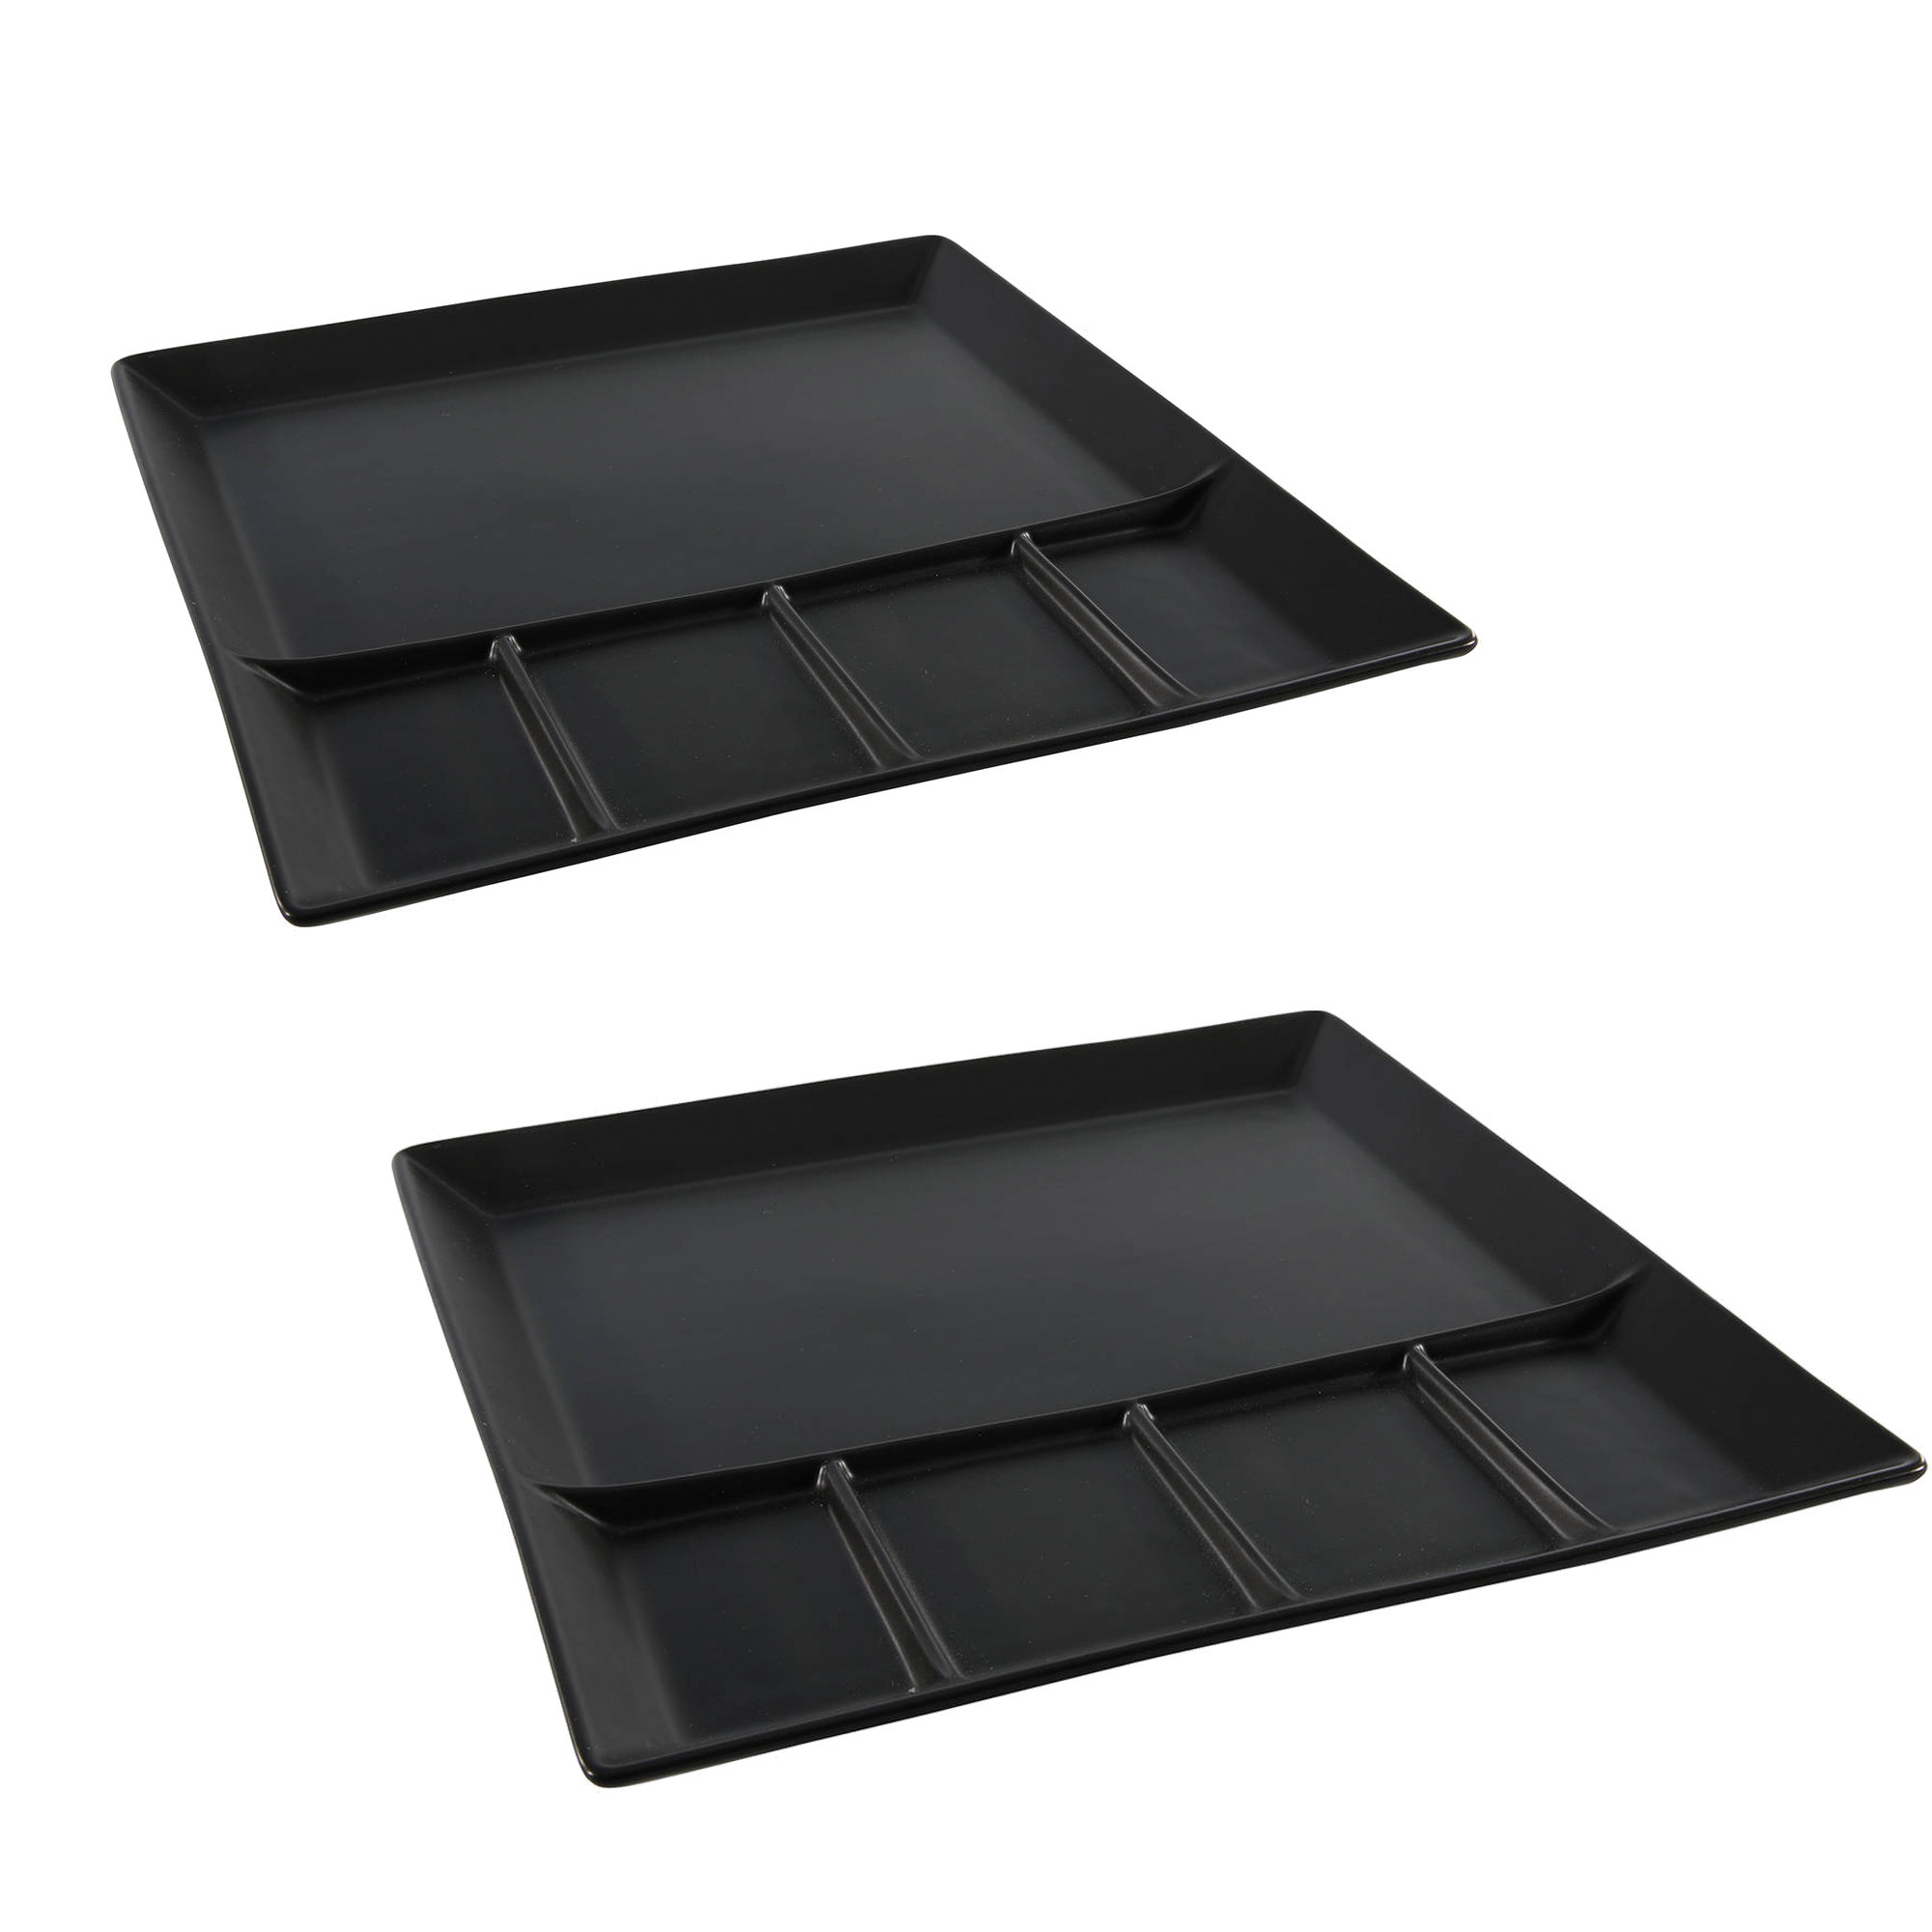 4x stuks mat zwart fondue-gourmet bord 5-vaks vierkant aardewerk 24 cm